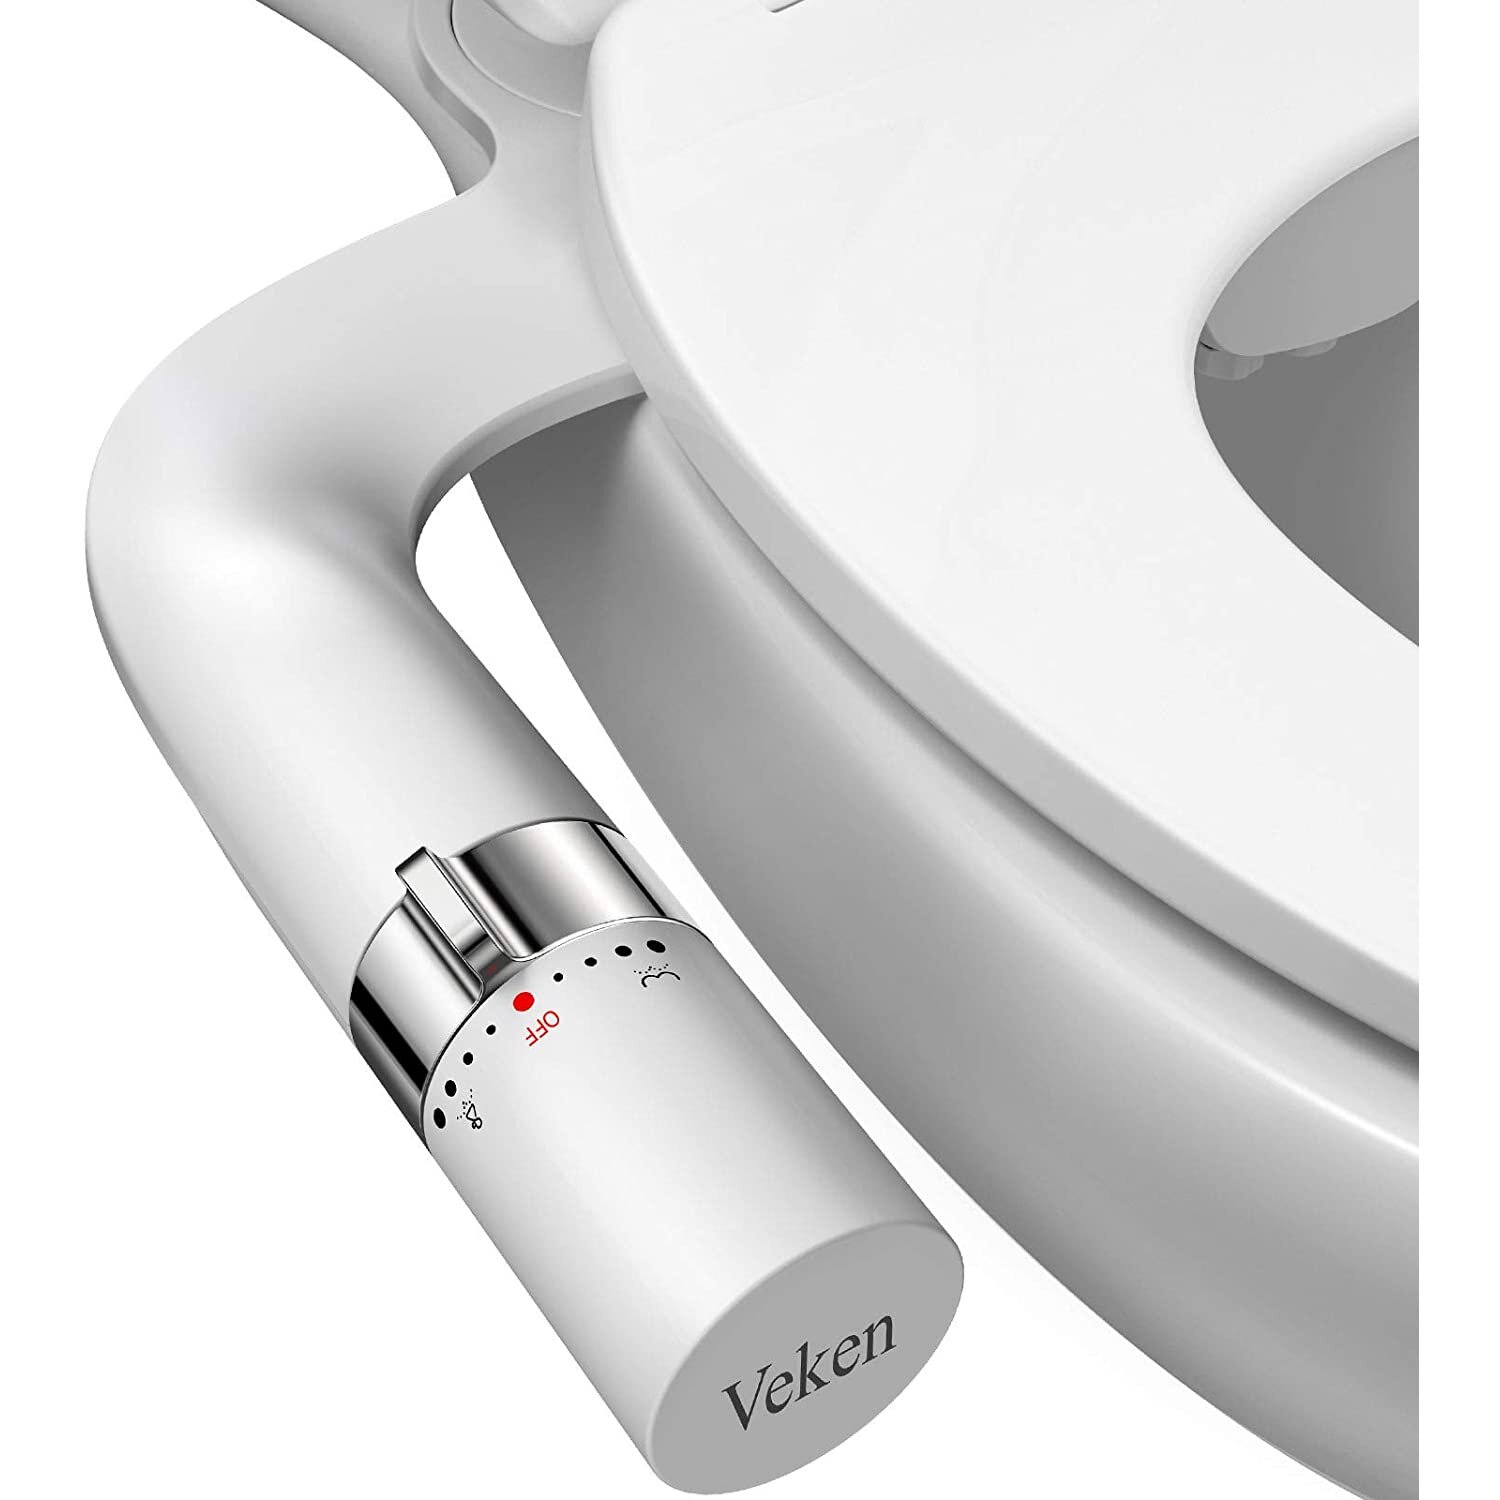 Veken Ultra-Slim Bidet, Non-Electric Dual Nozzle (Posterior/Feminine Wash) Fresh Water Sprayer Bidet, Adjustable Water Pressure Bidet Seat Attachment